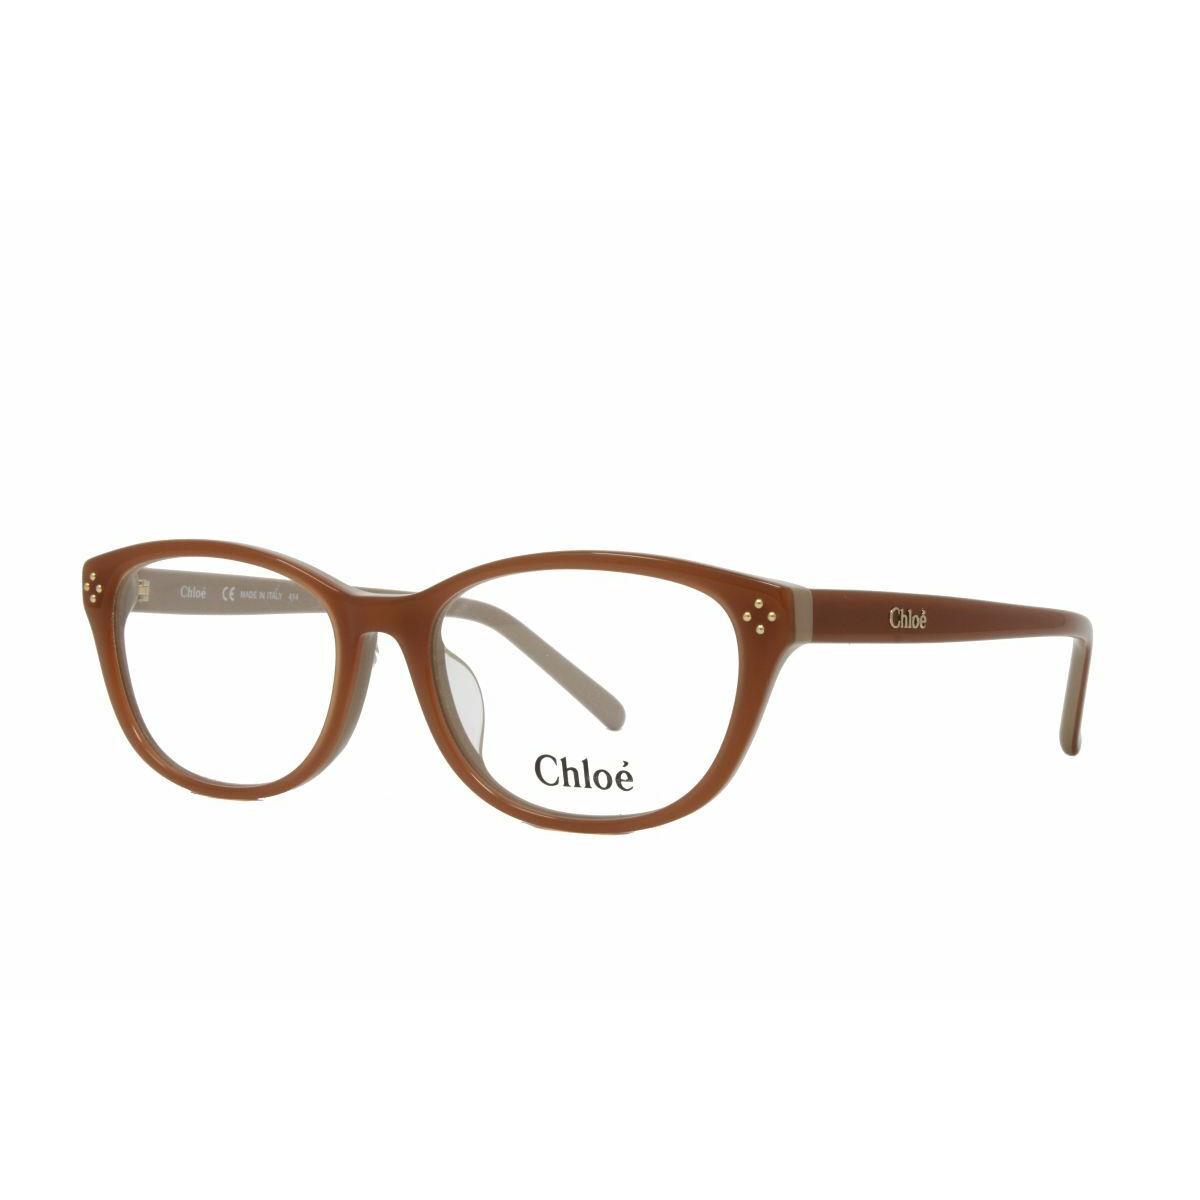 Chloé Chloe Women`s Eyeglasses CE2651A Color 208 Caramel Size 54mm with Hard Case